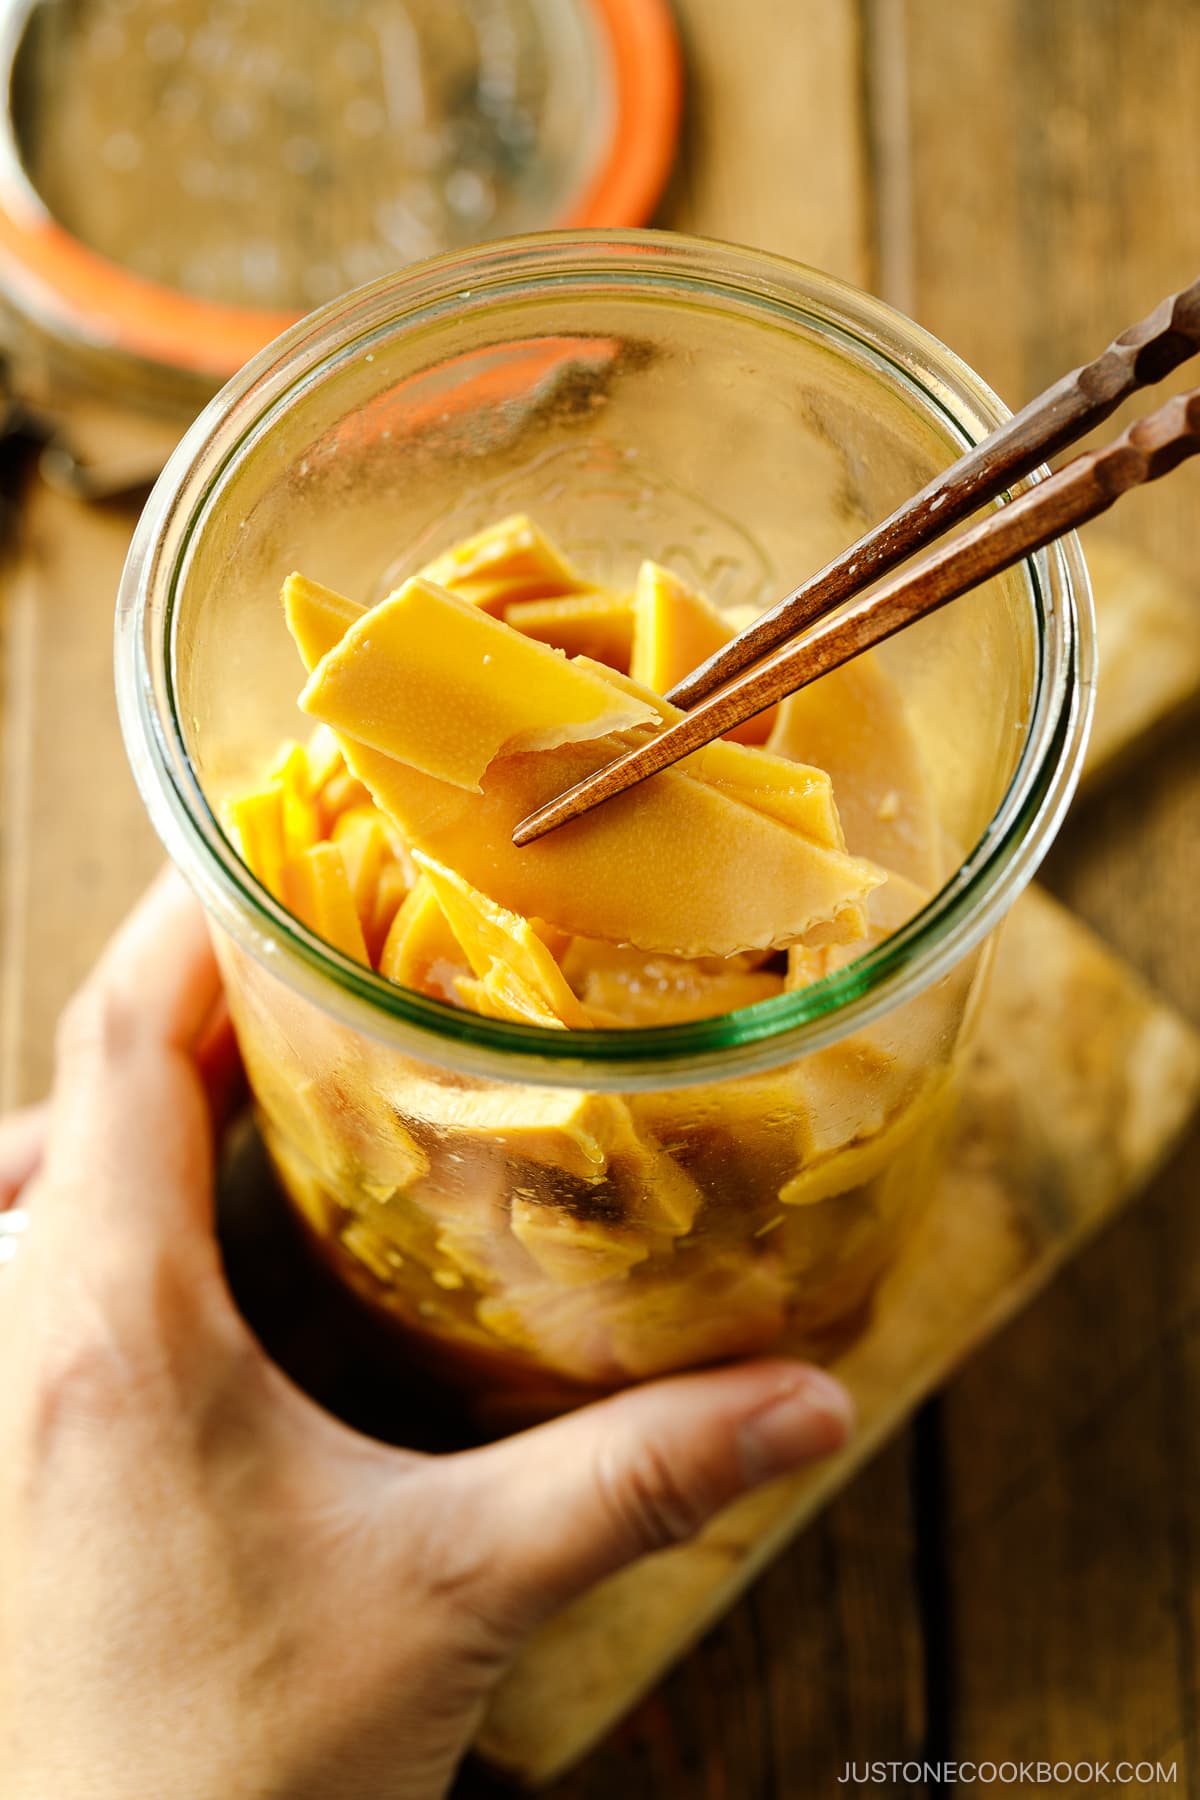 A glass Weck jar containing menma, seasoned bamboo shoots for ramen.